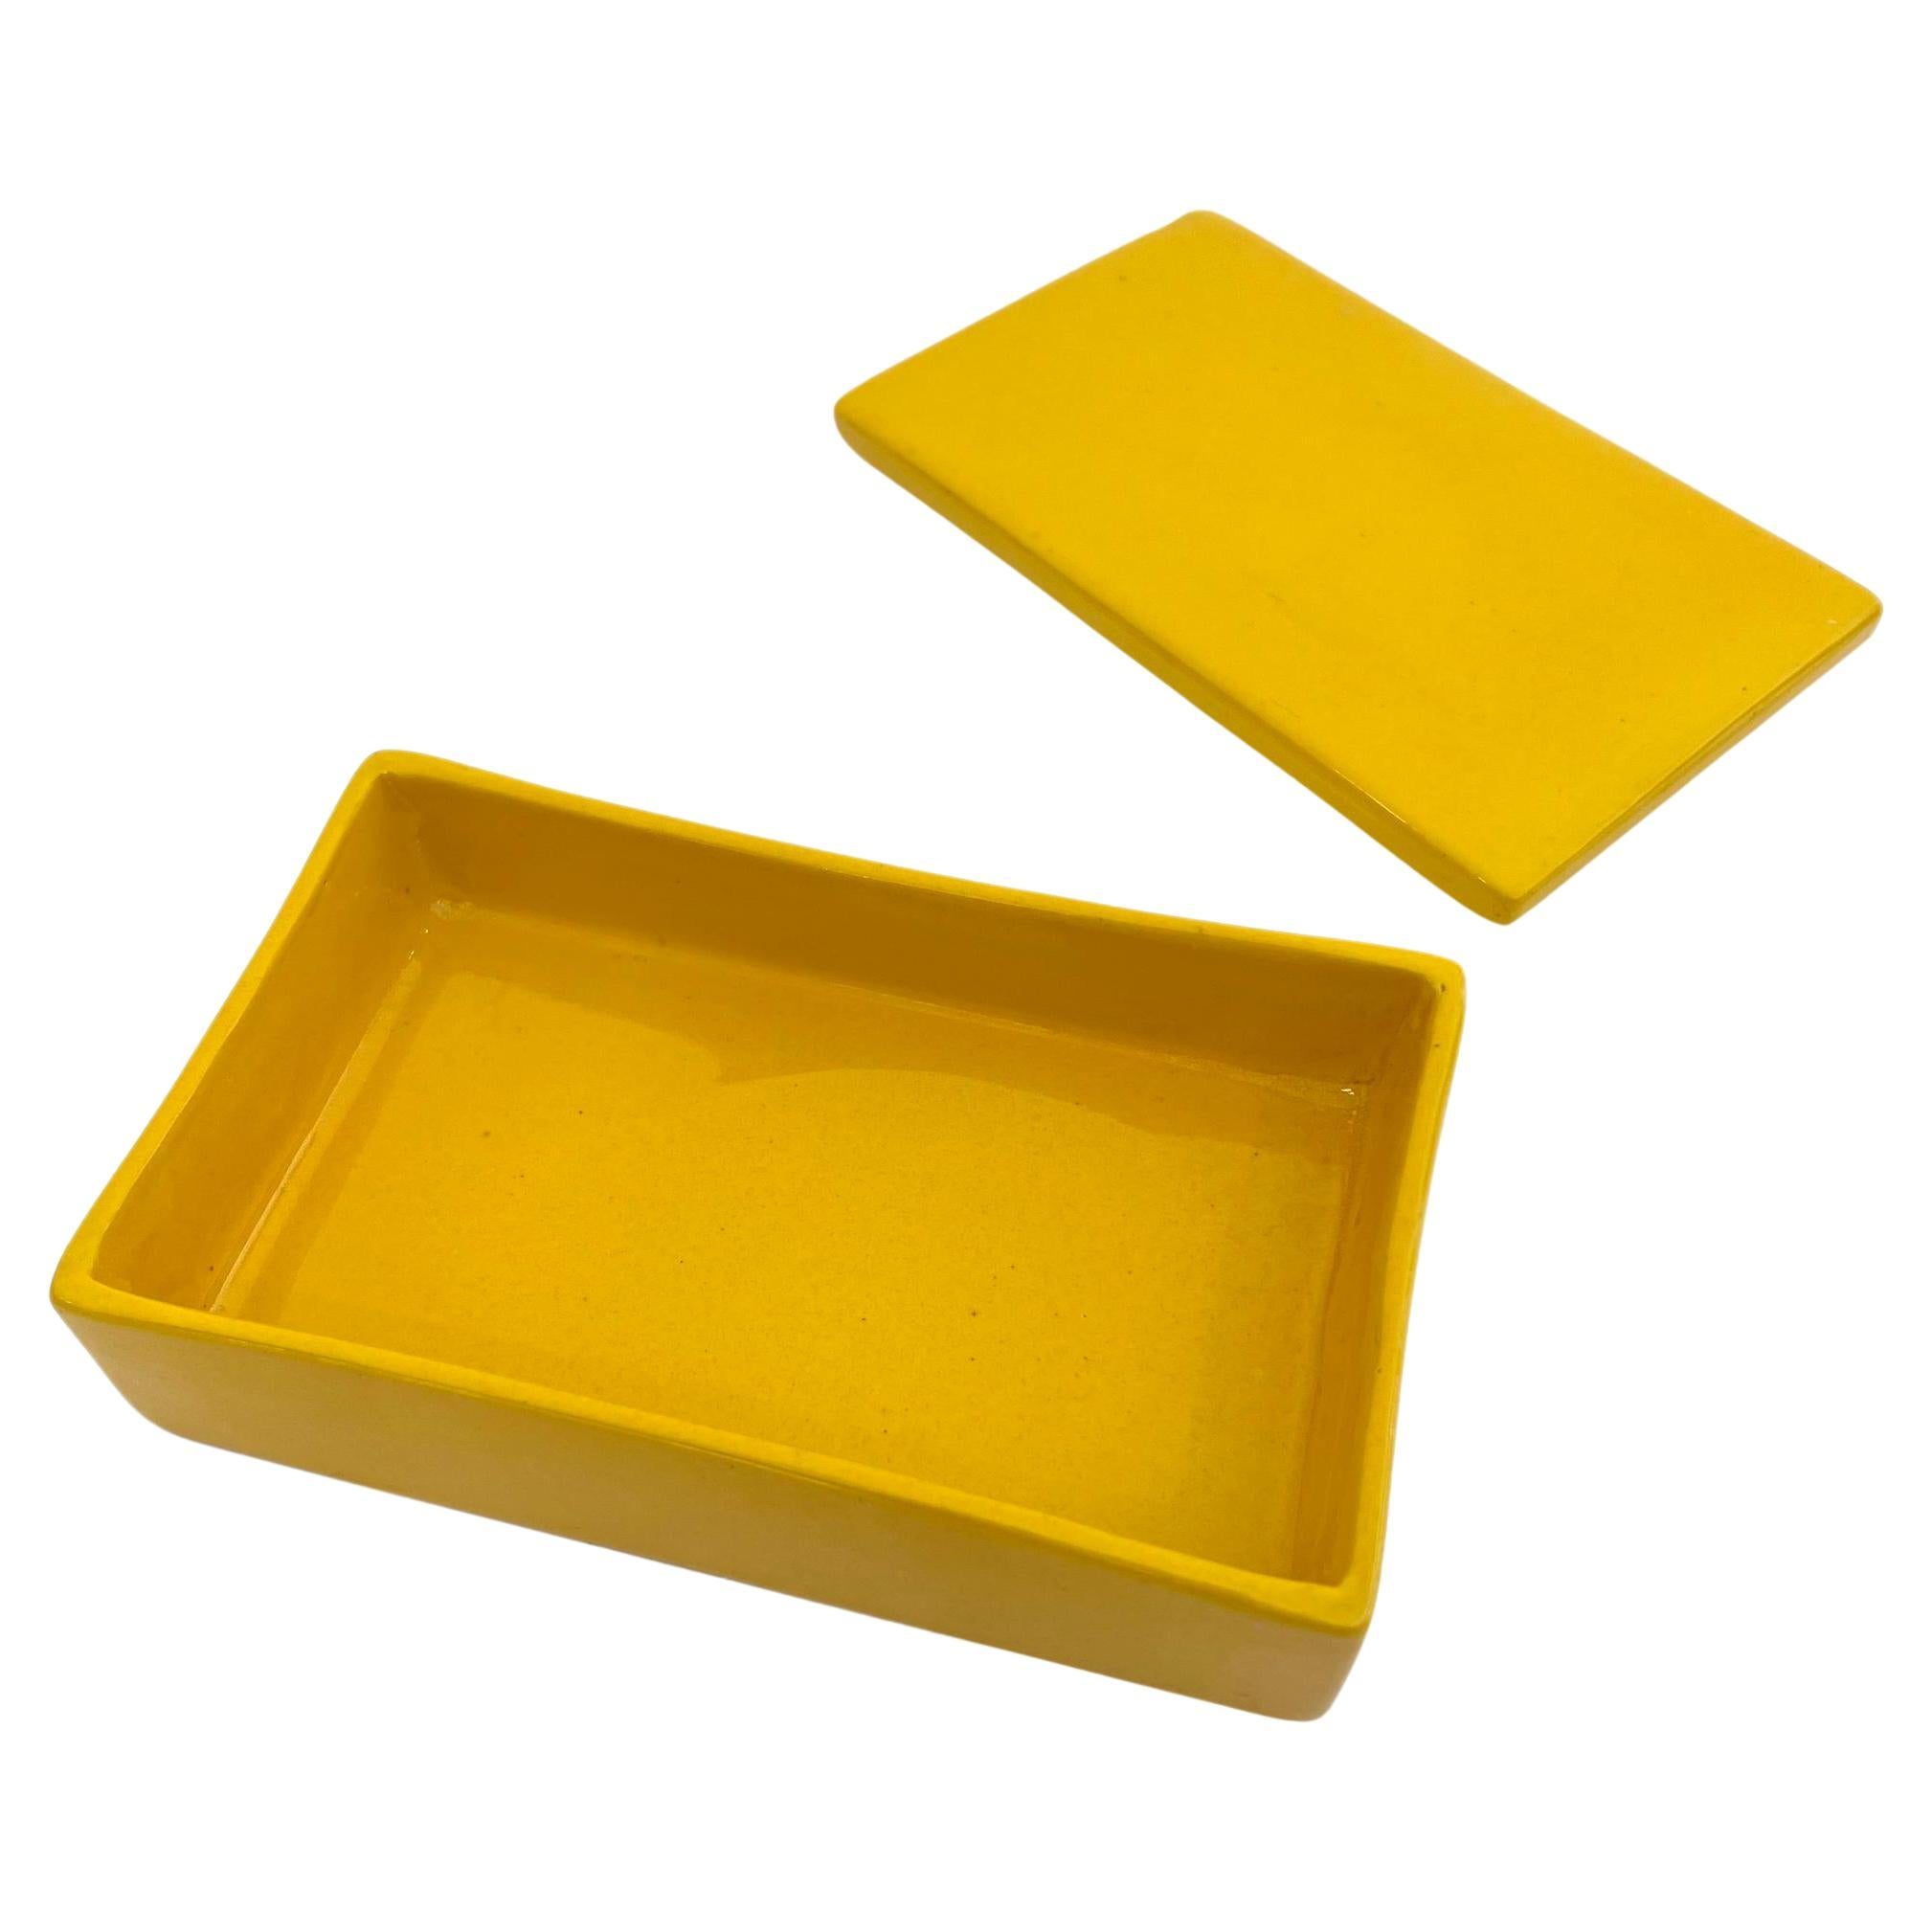 Yellow Raymor Ceramic Box, 1960s Italy